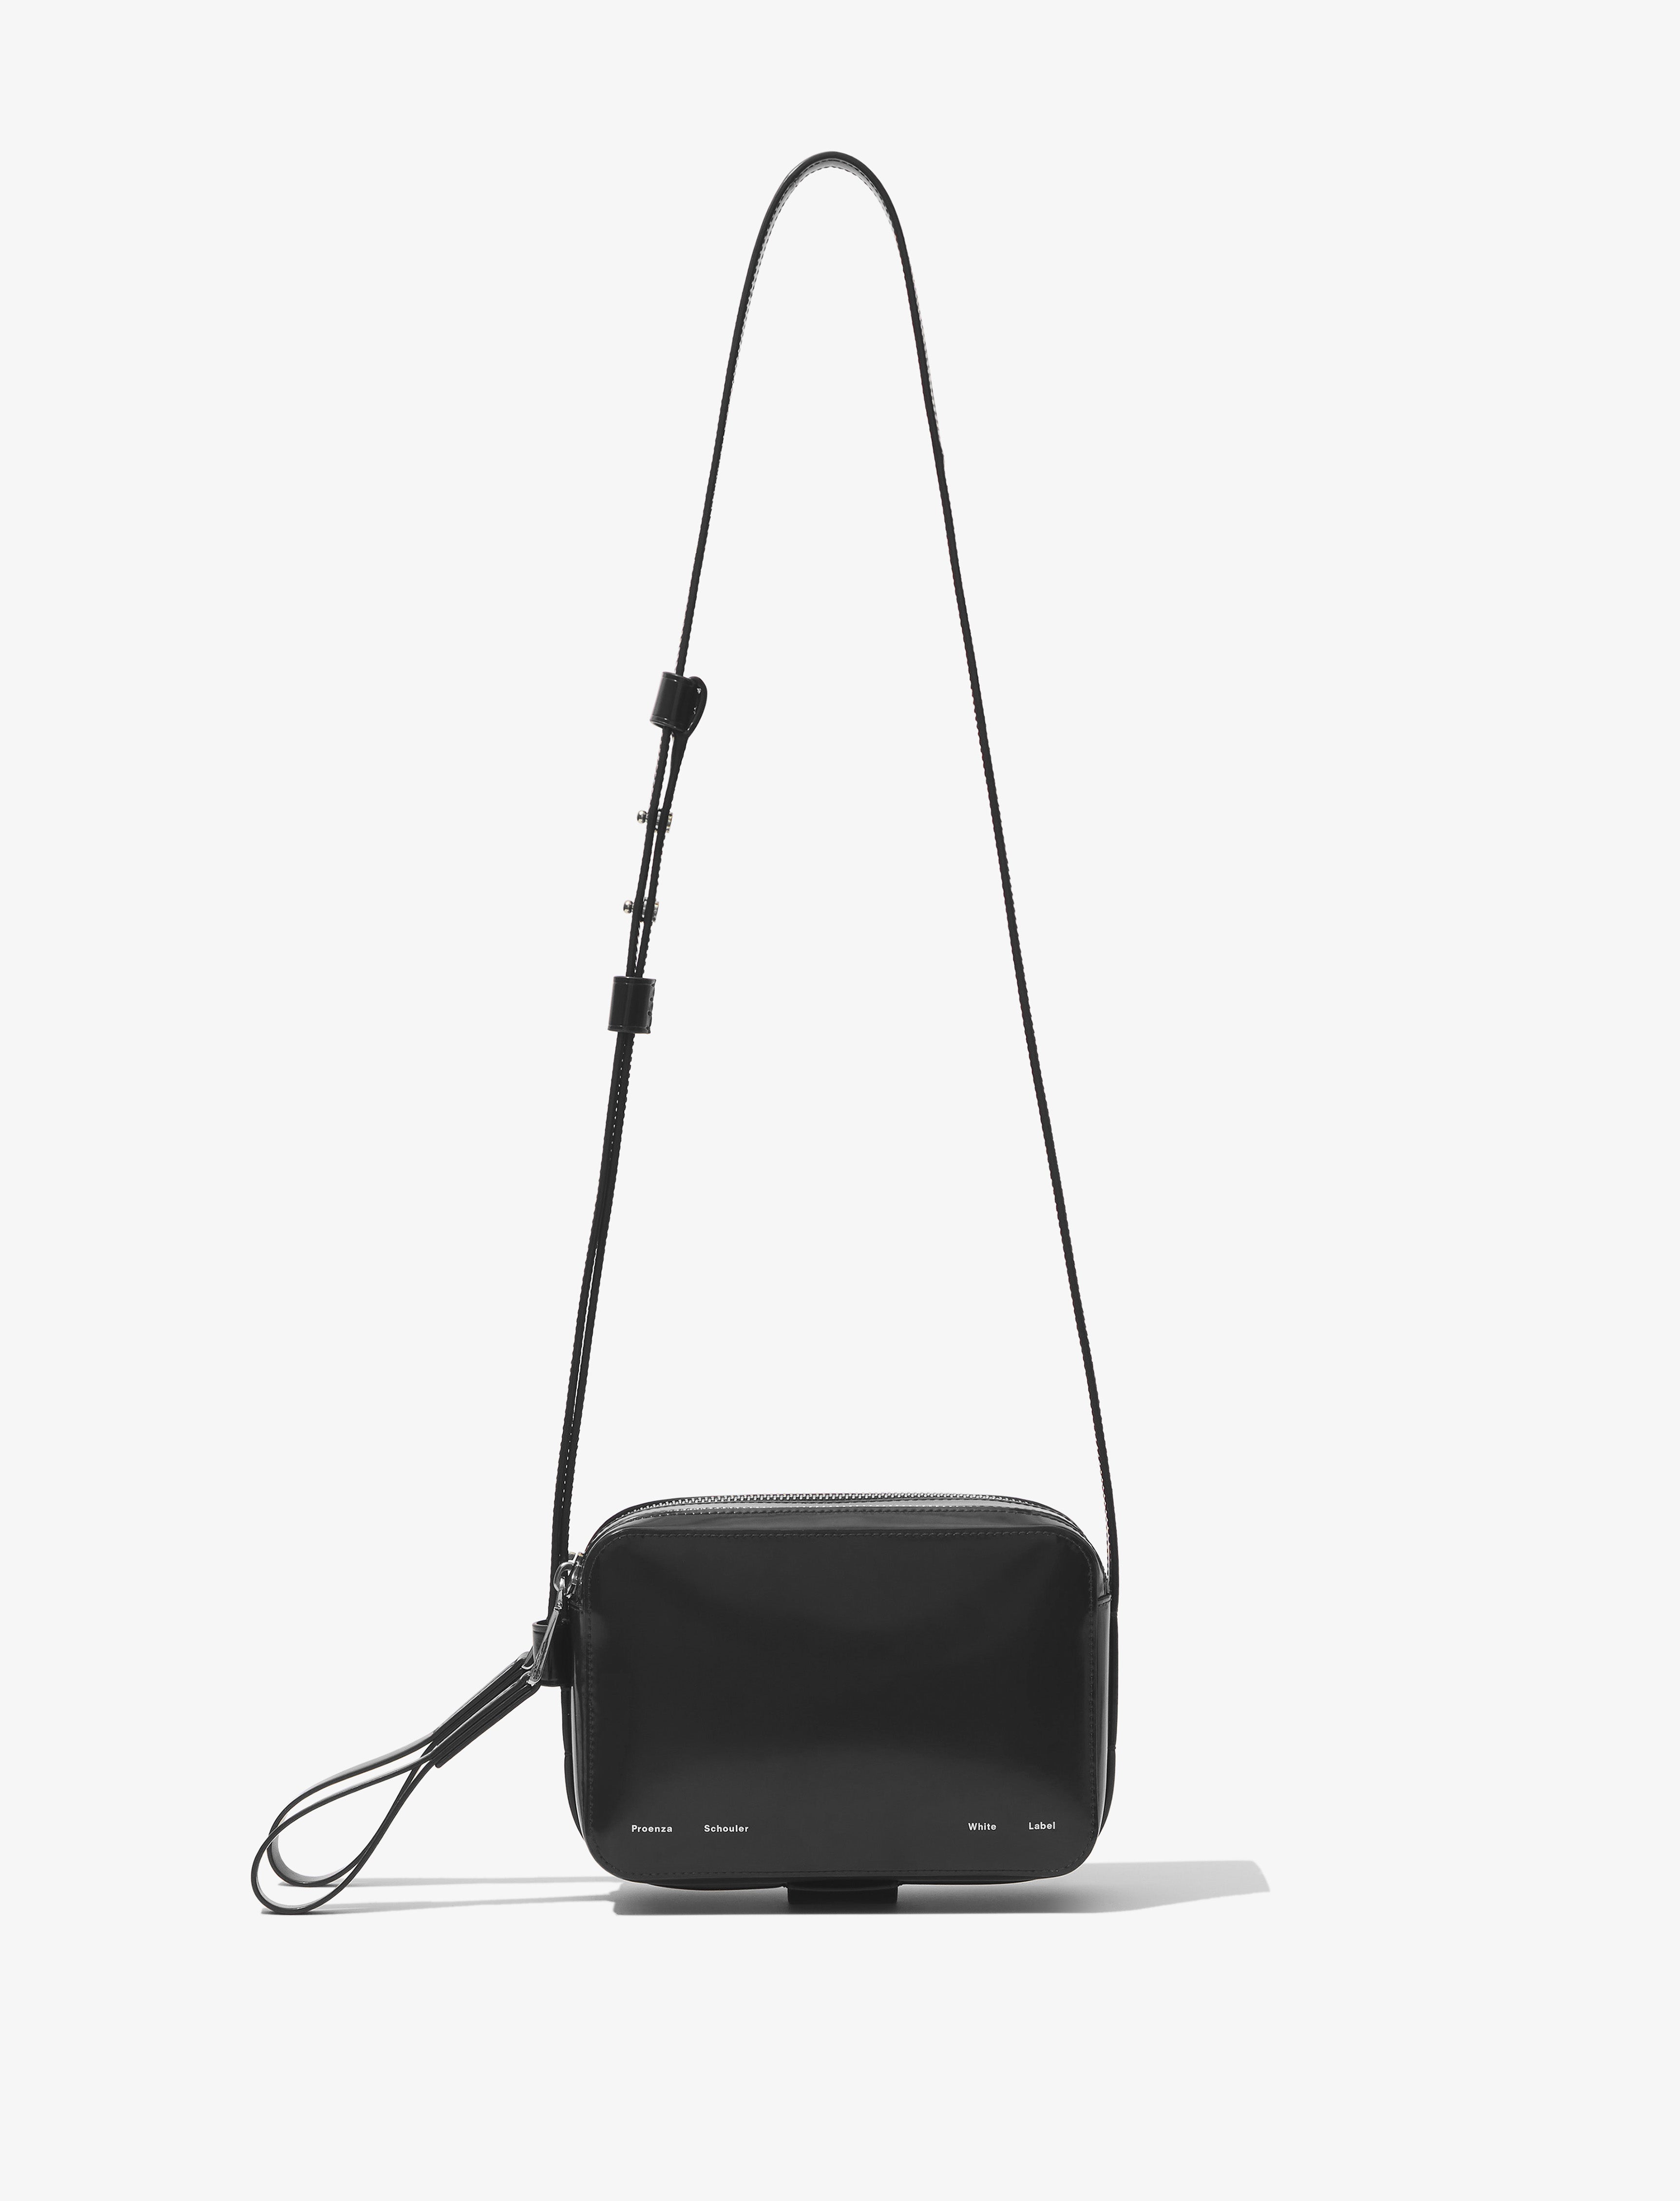 Proenza Schouler White Label Watts Camera Bag in Spazzolato Leather - Black  | Proenza Schouler Official Site